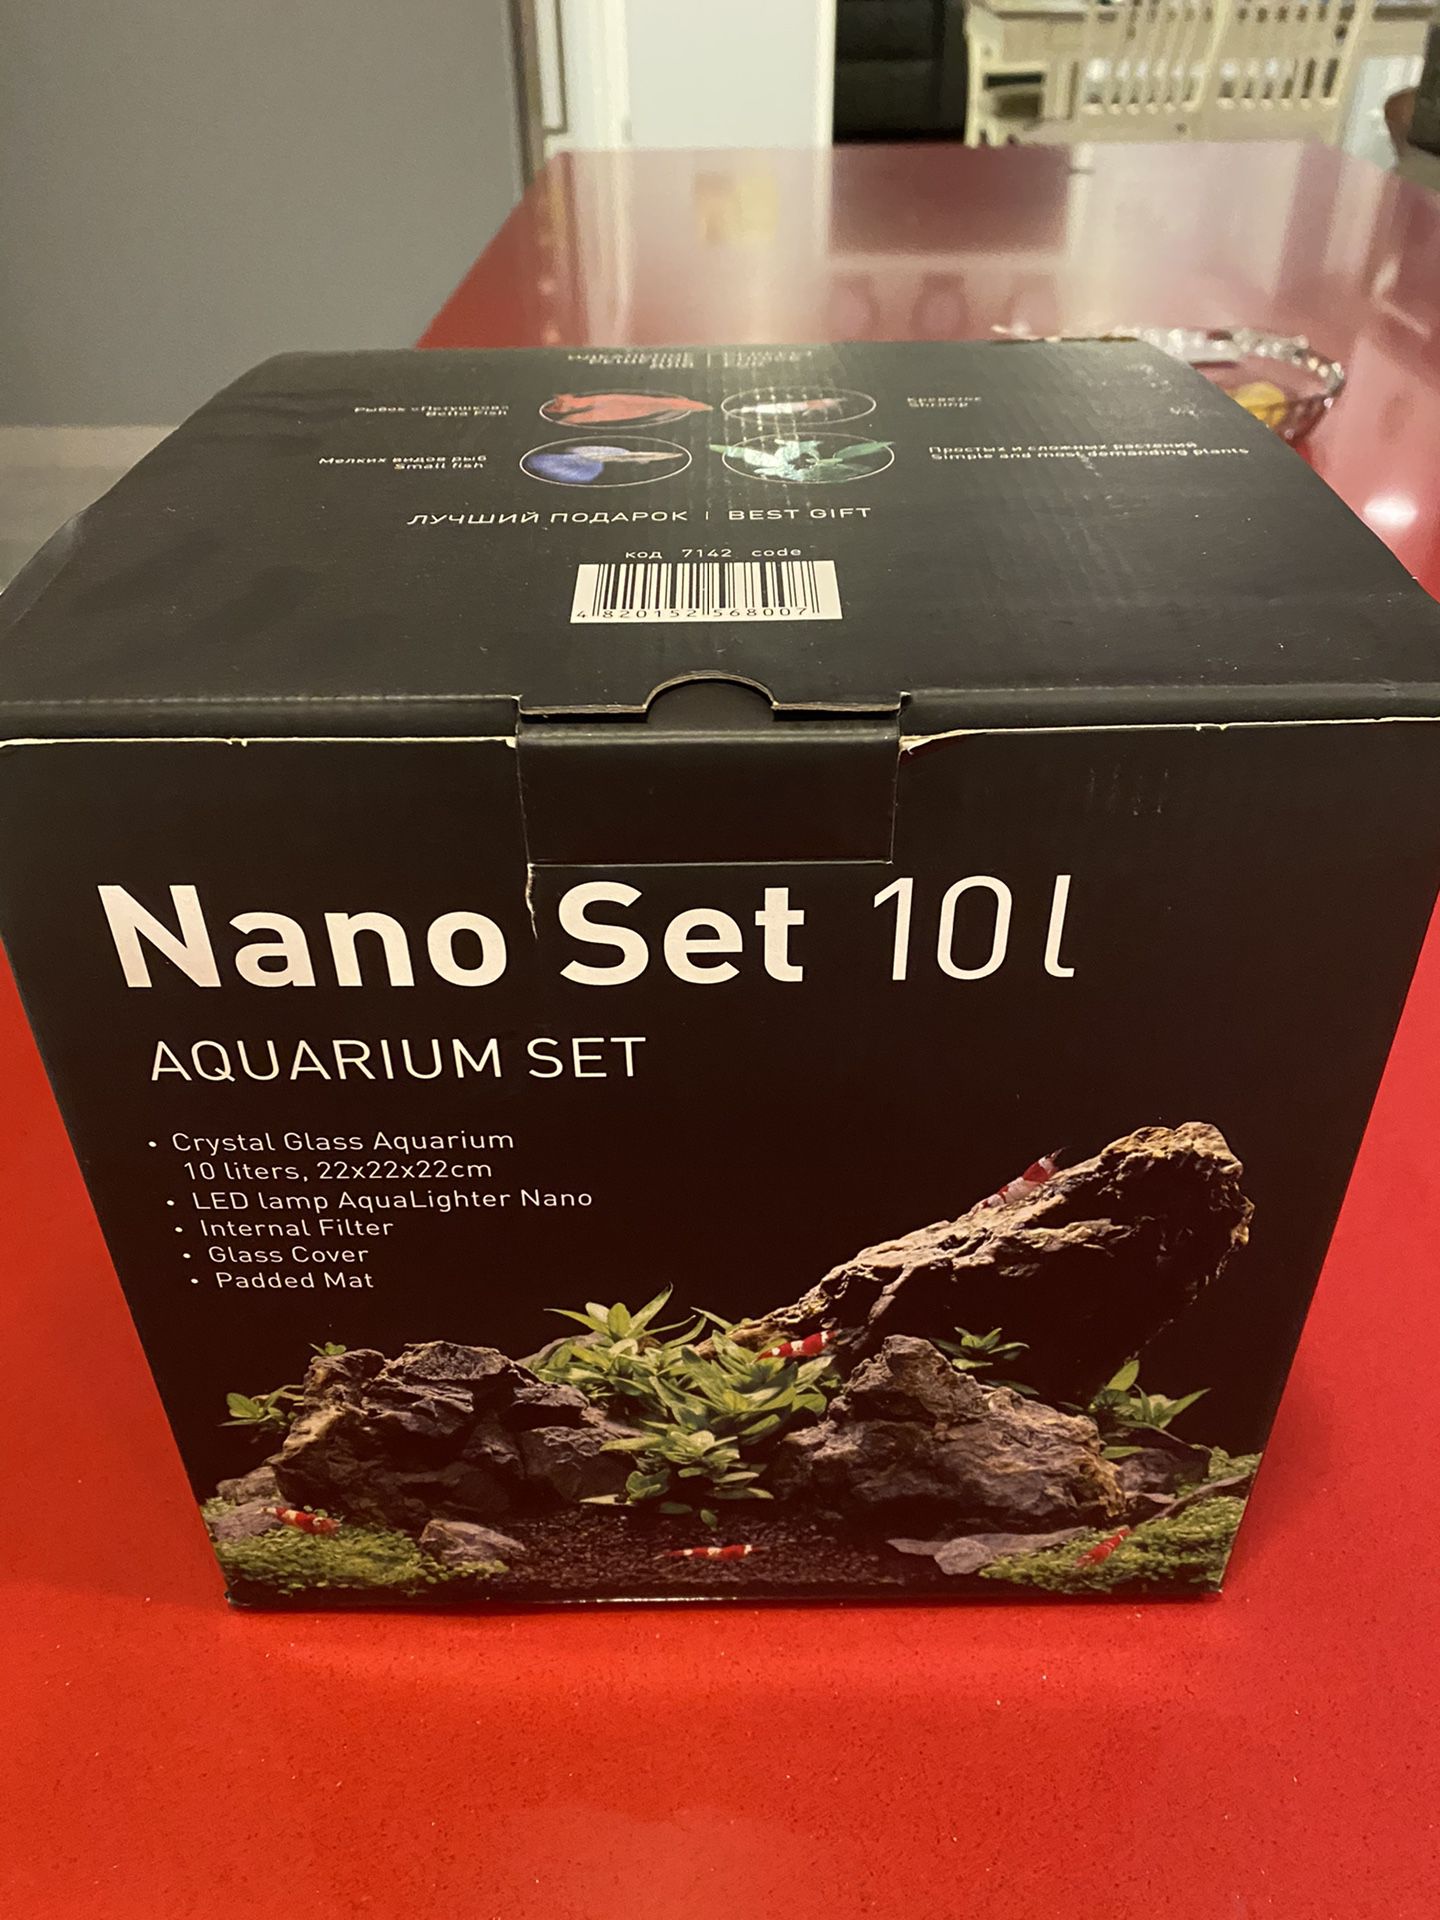 Nano Fishtank - ideal for Betta Fish